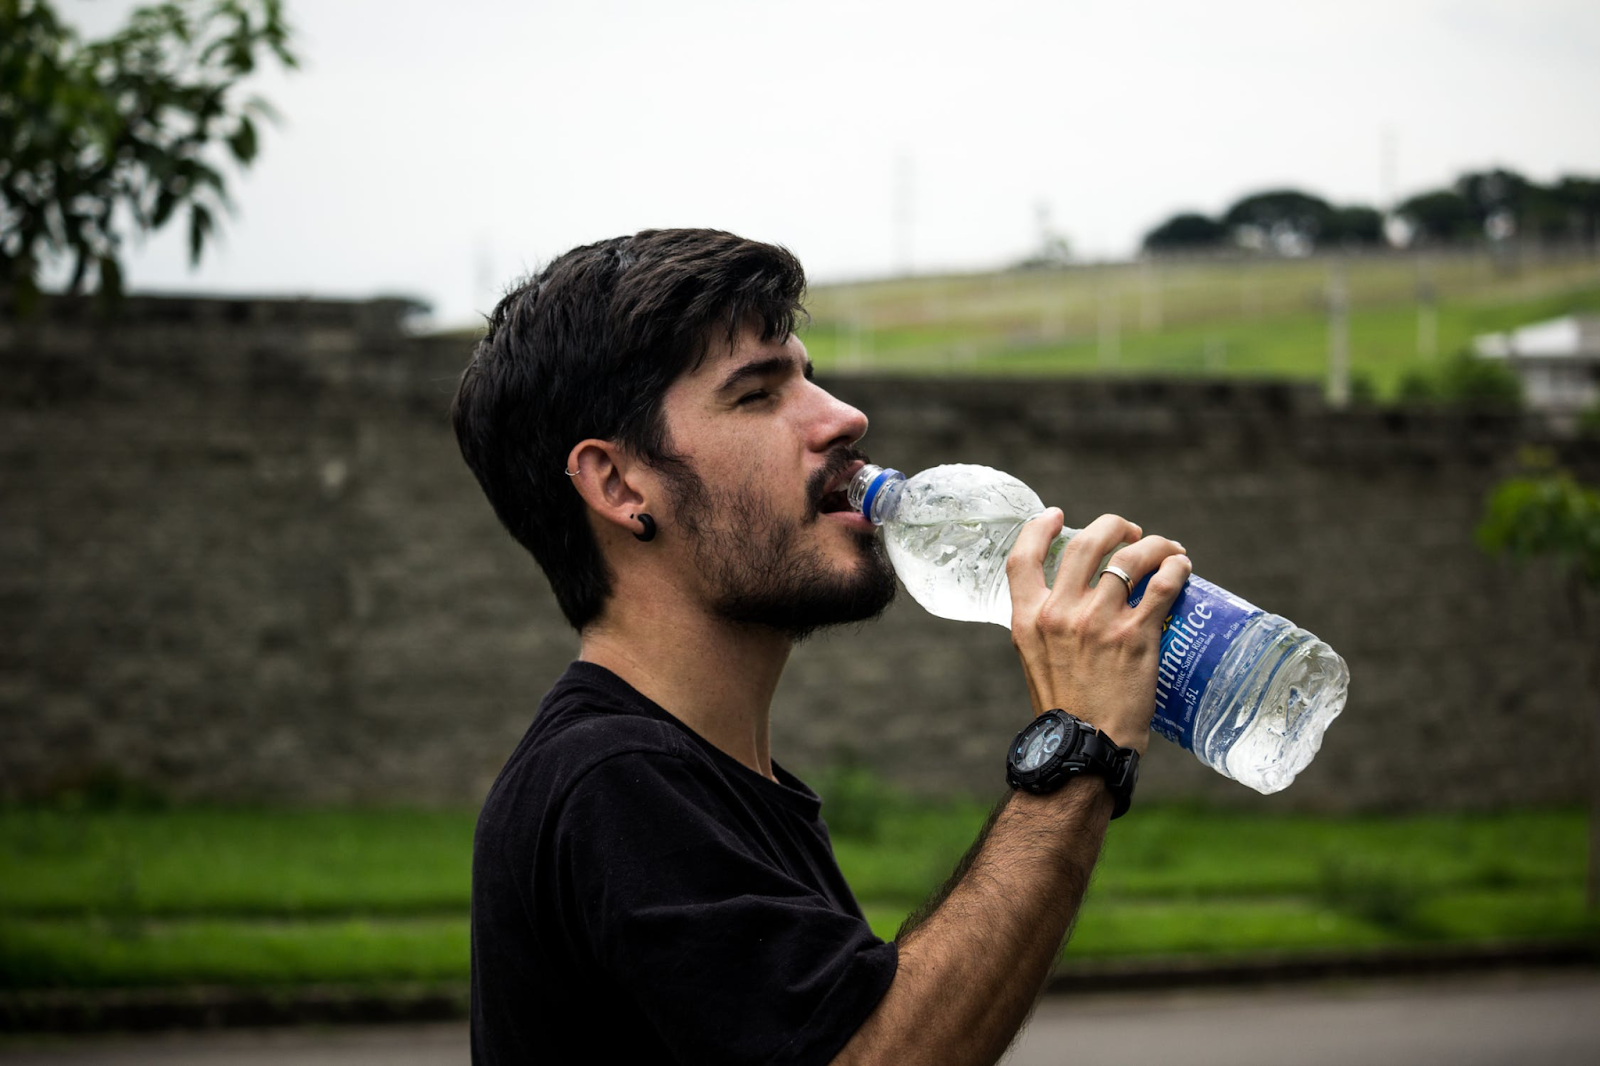 drinking water | Photo by Maurício Mascaro from Pexels | https://www.pexels.com/photo/man-wearing-black-shirt-drinking-water-907865/?utm_content=attributionCopyText&utm_medium=referral&utm_source=pexels